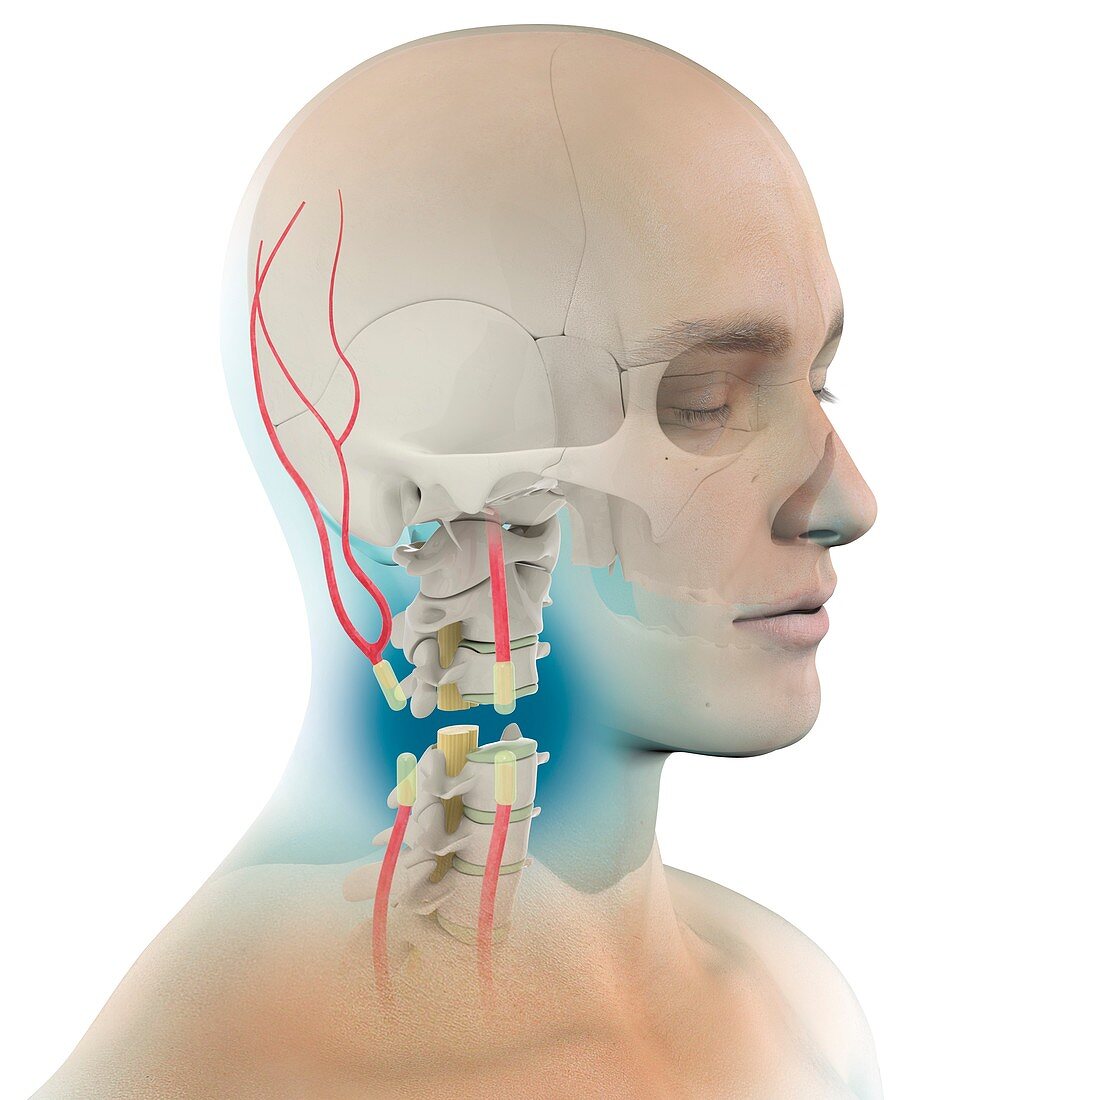 Head transplant,conceptual illustration